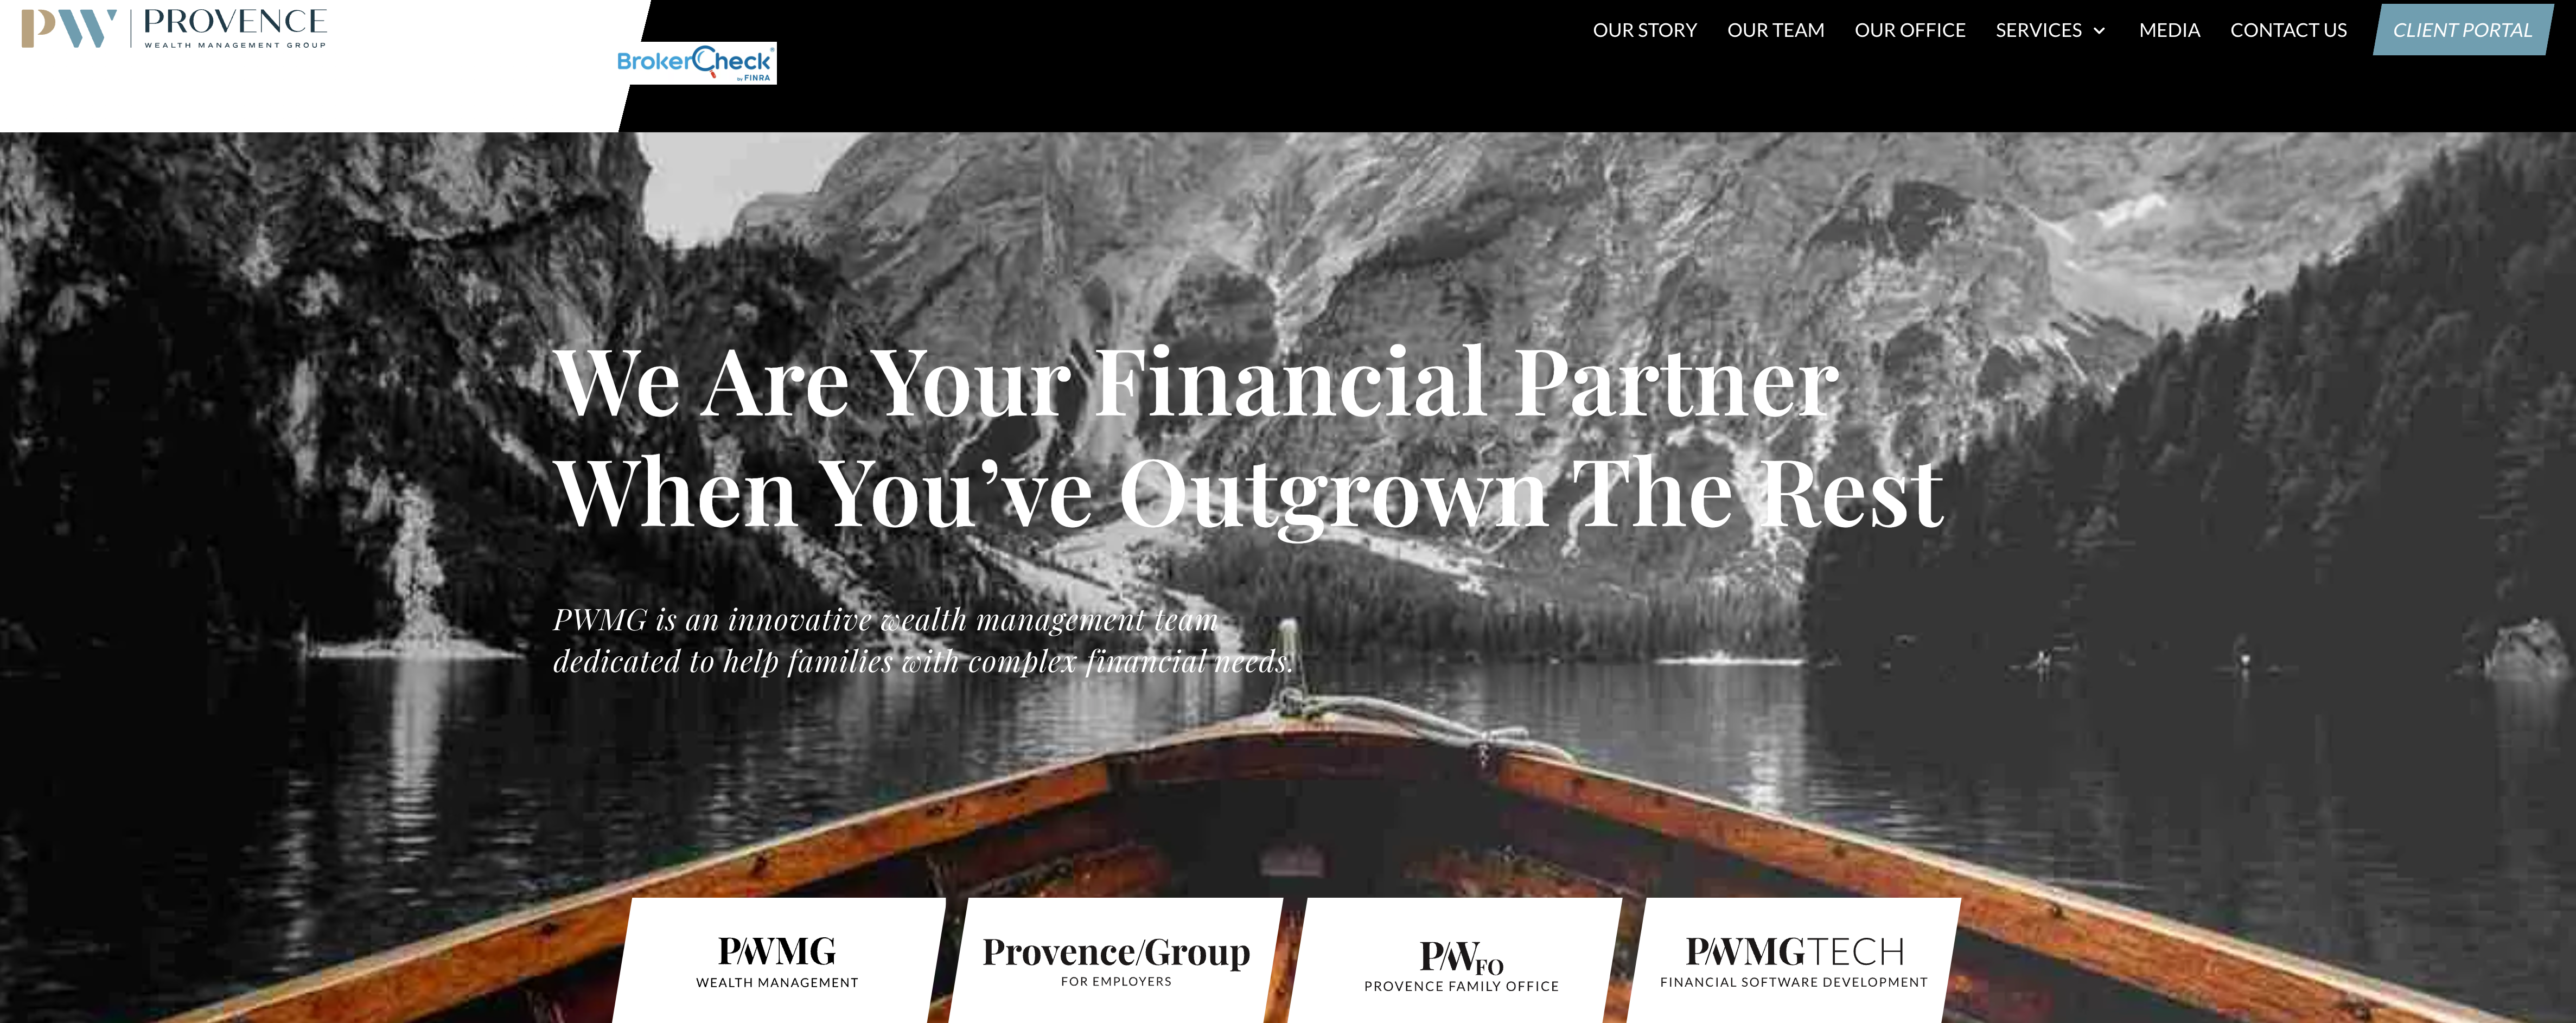 Financial advising company website design example - 1